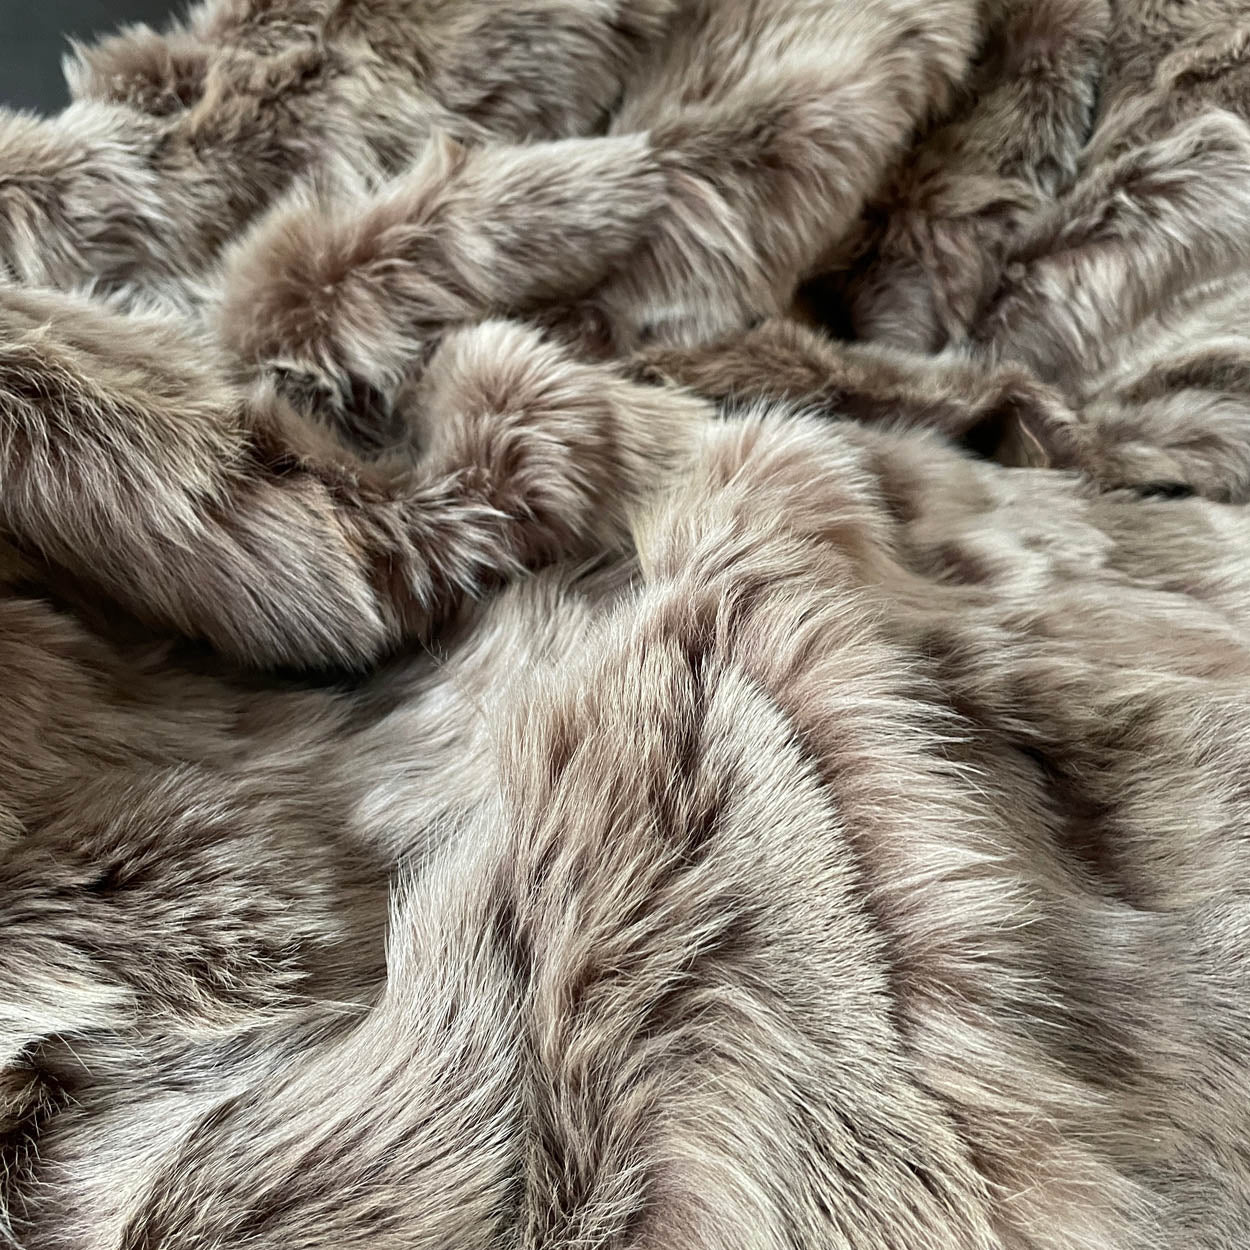 Toscana Shearling Throw Rich Tawny Brown | Shearling Rug | Fur Blanket 140cm x 170cm - Wildash London